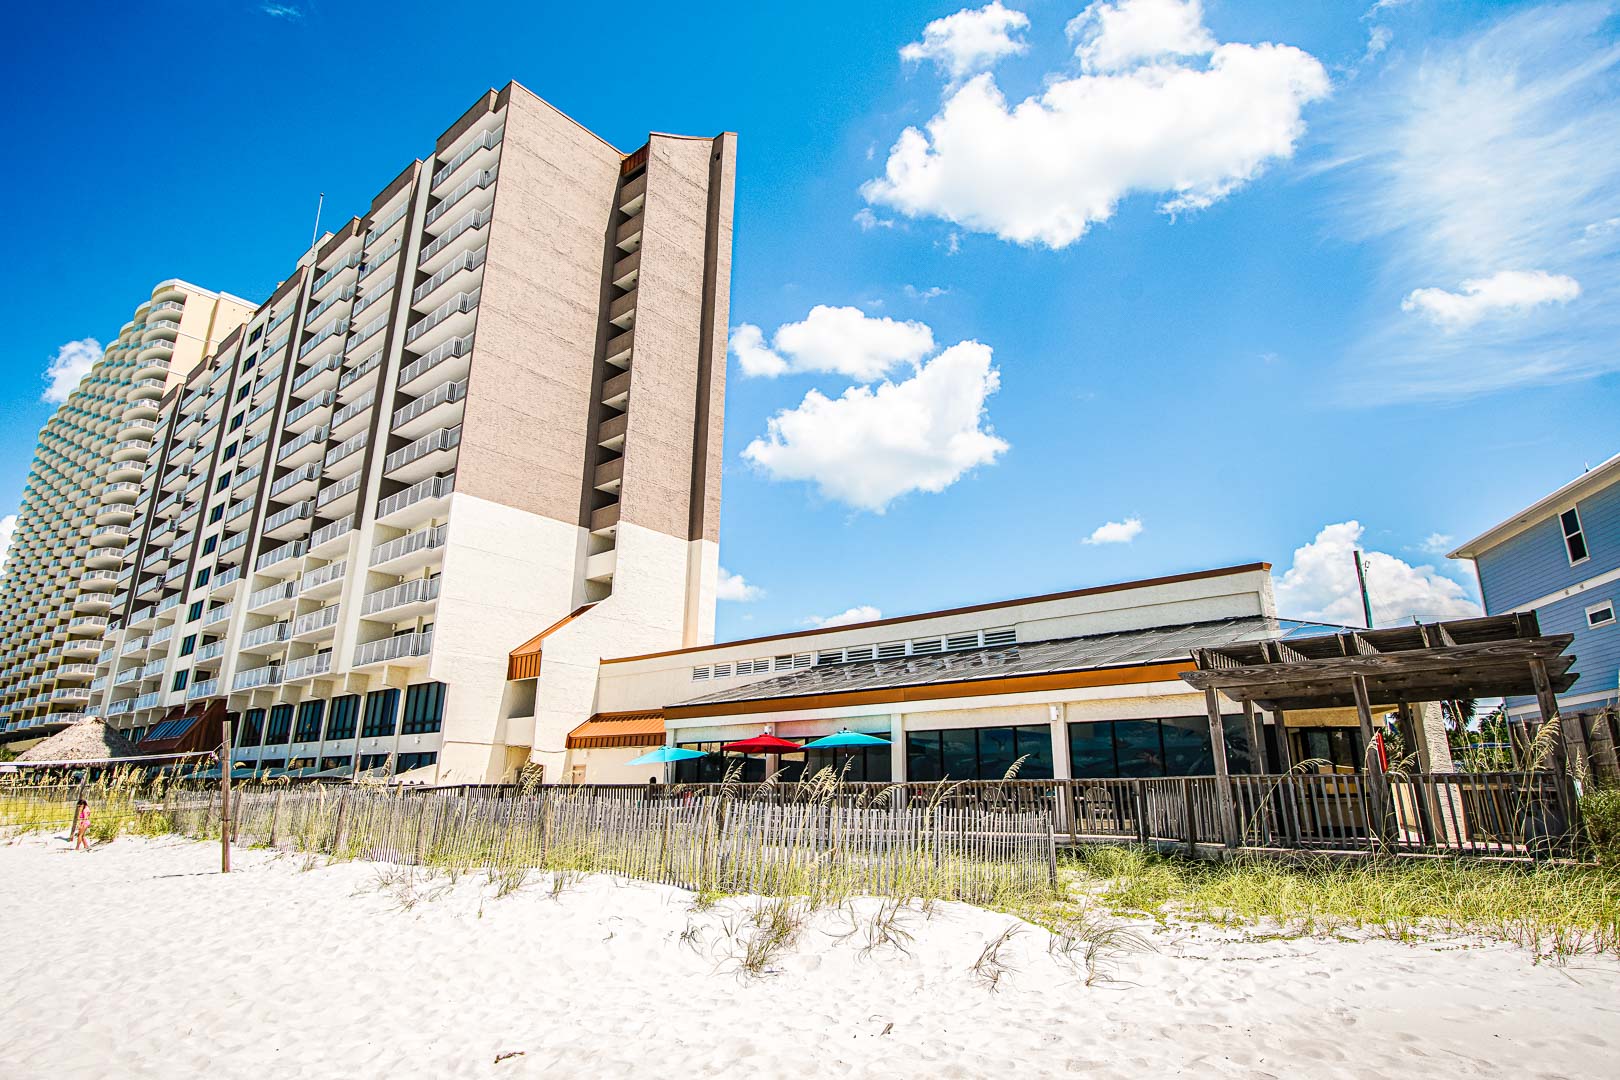 An exterior view of VRI's Landmark Holiday Beach Resort in Panama City, Florida.